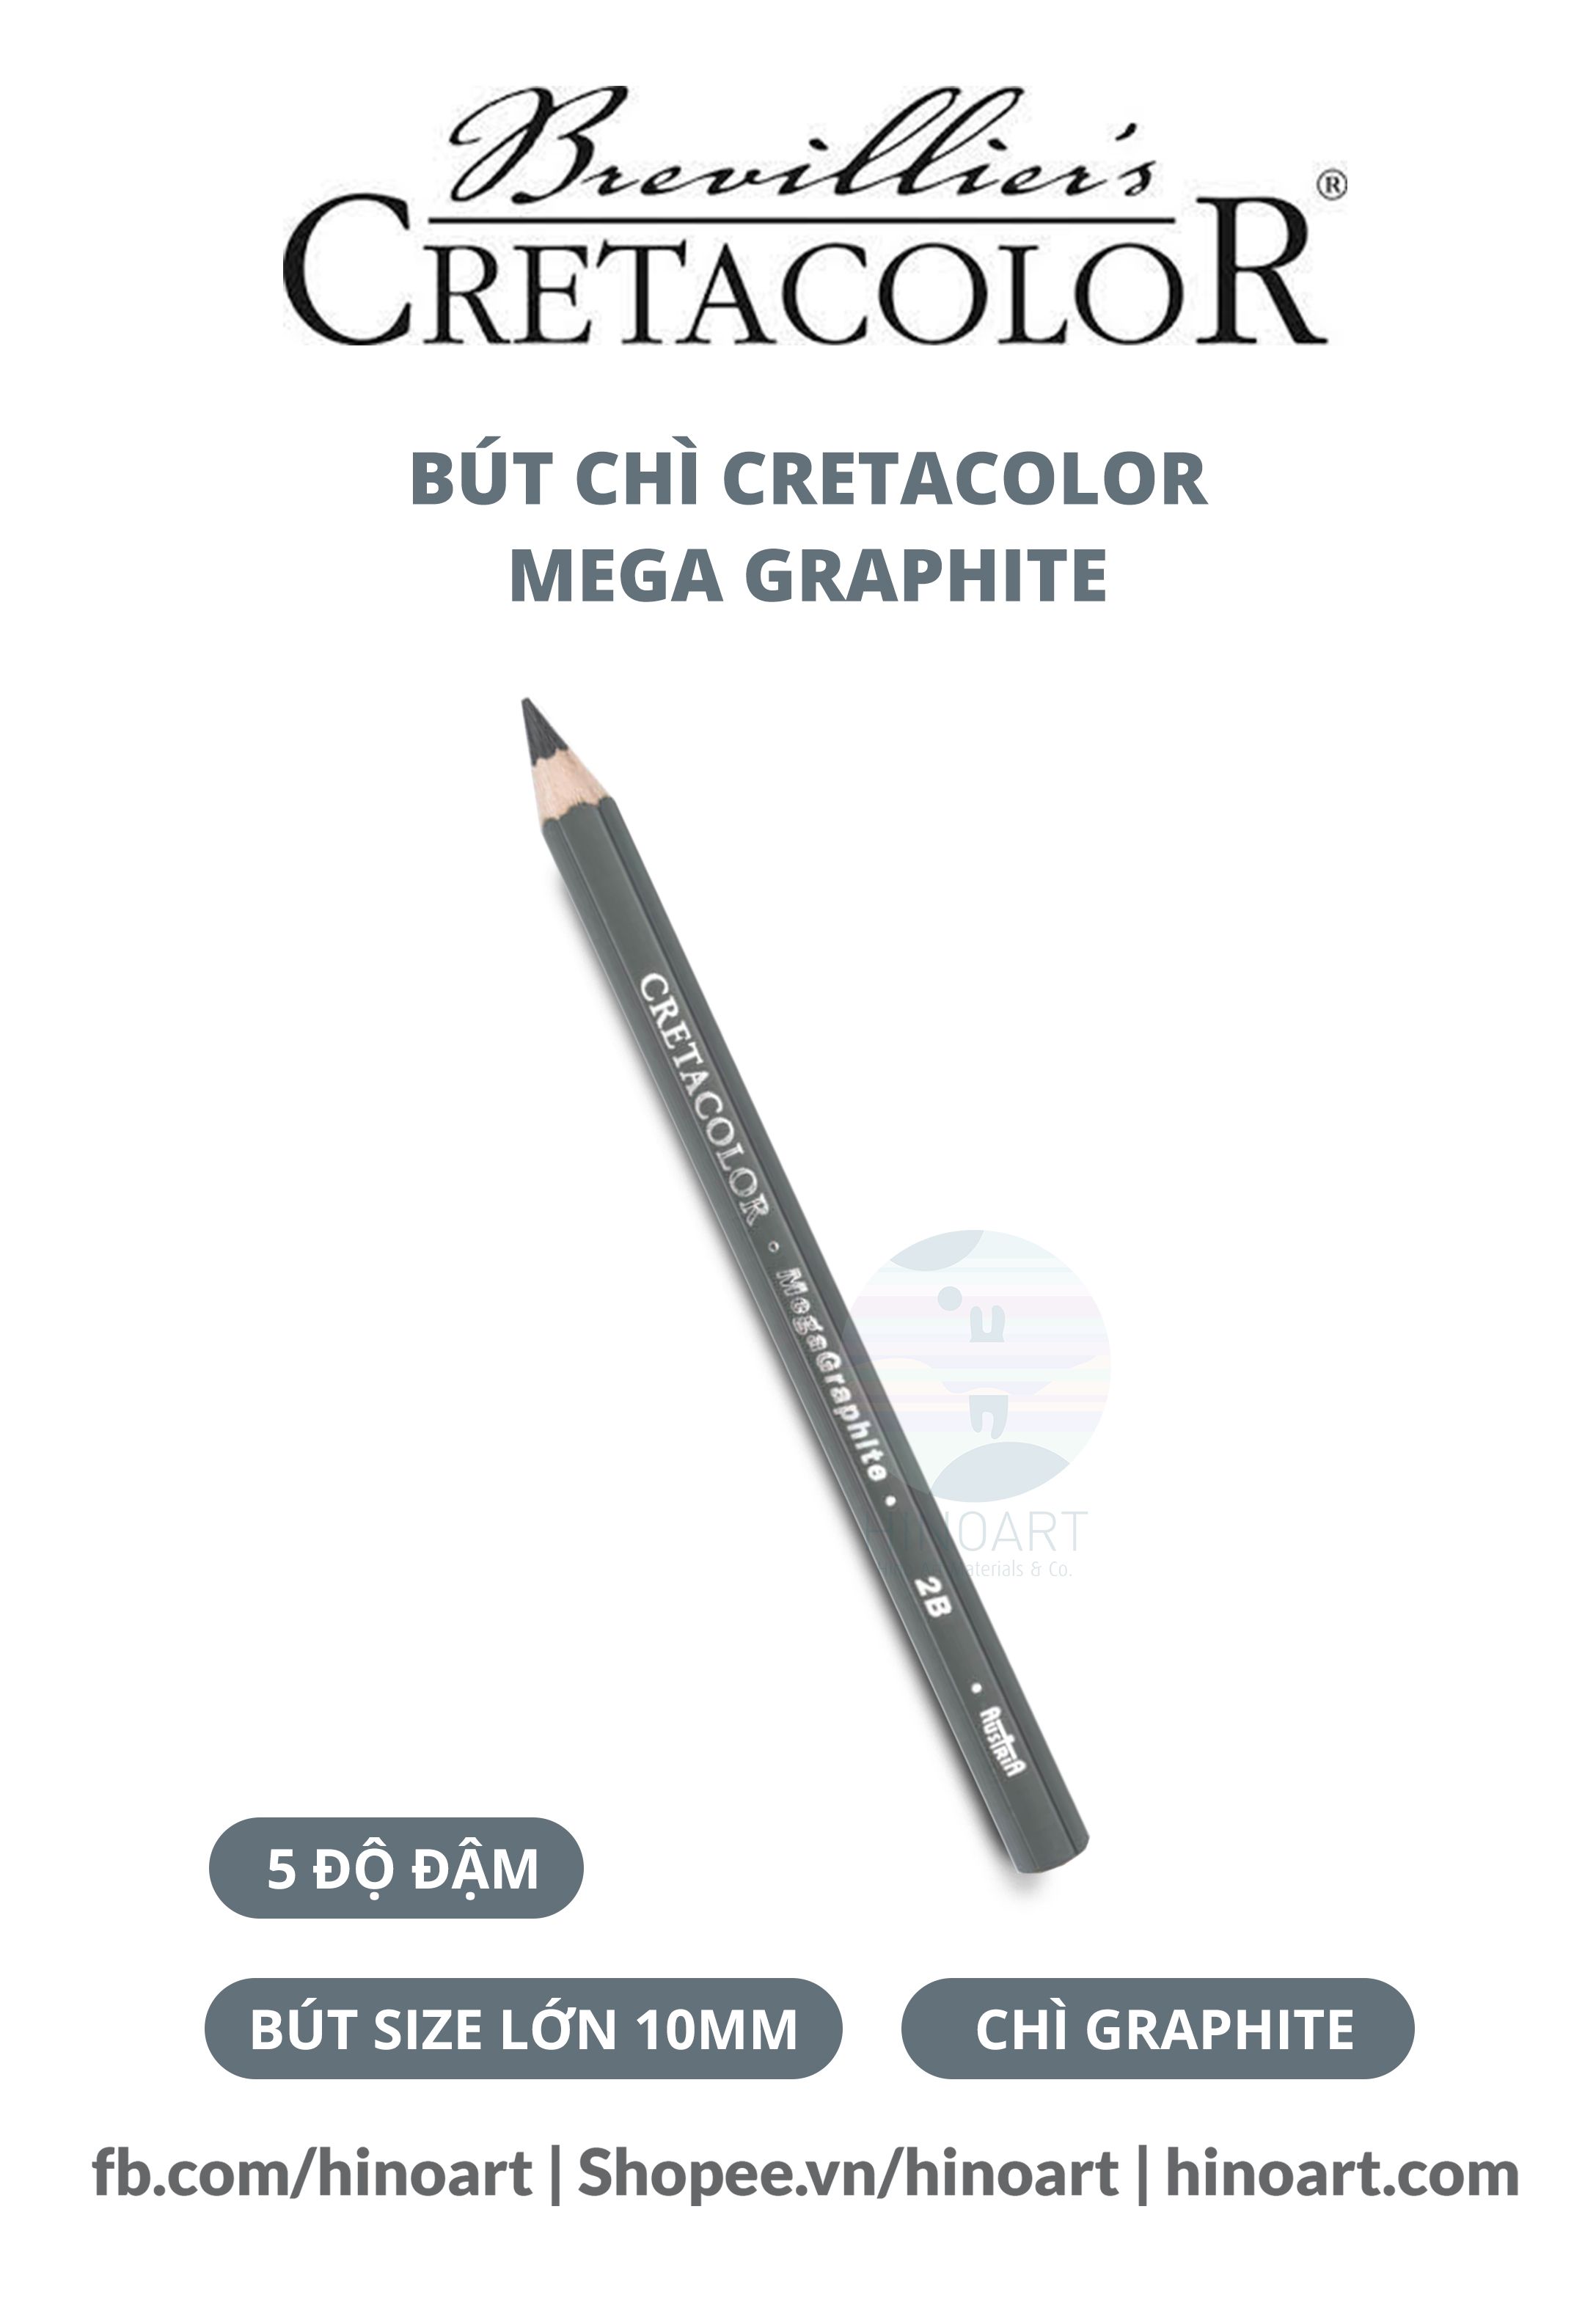 Mega graphite pencil - Cretacolor